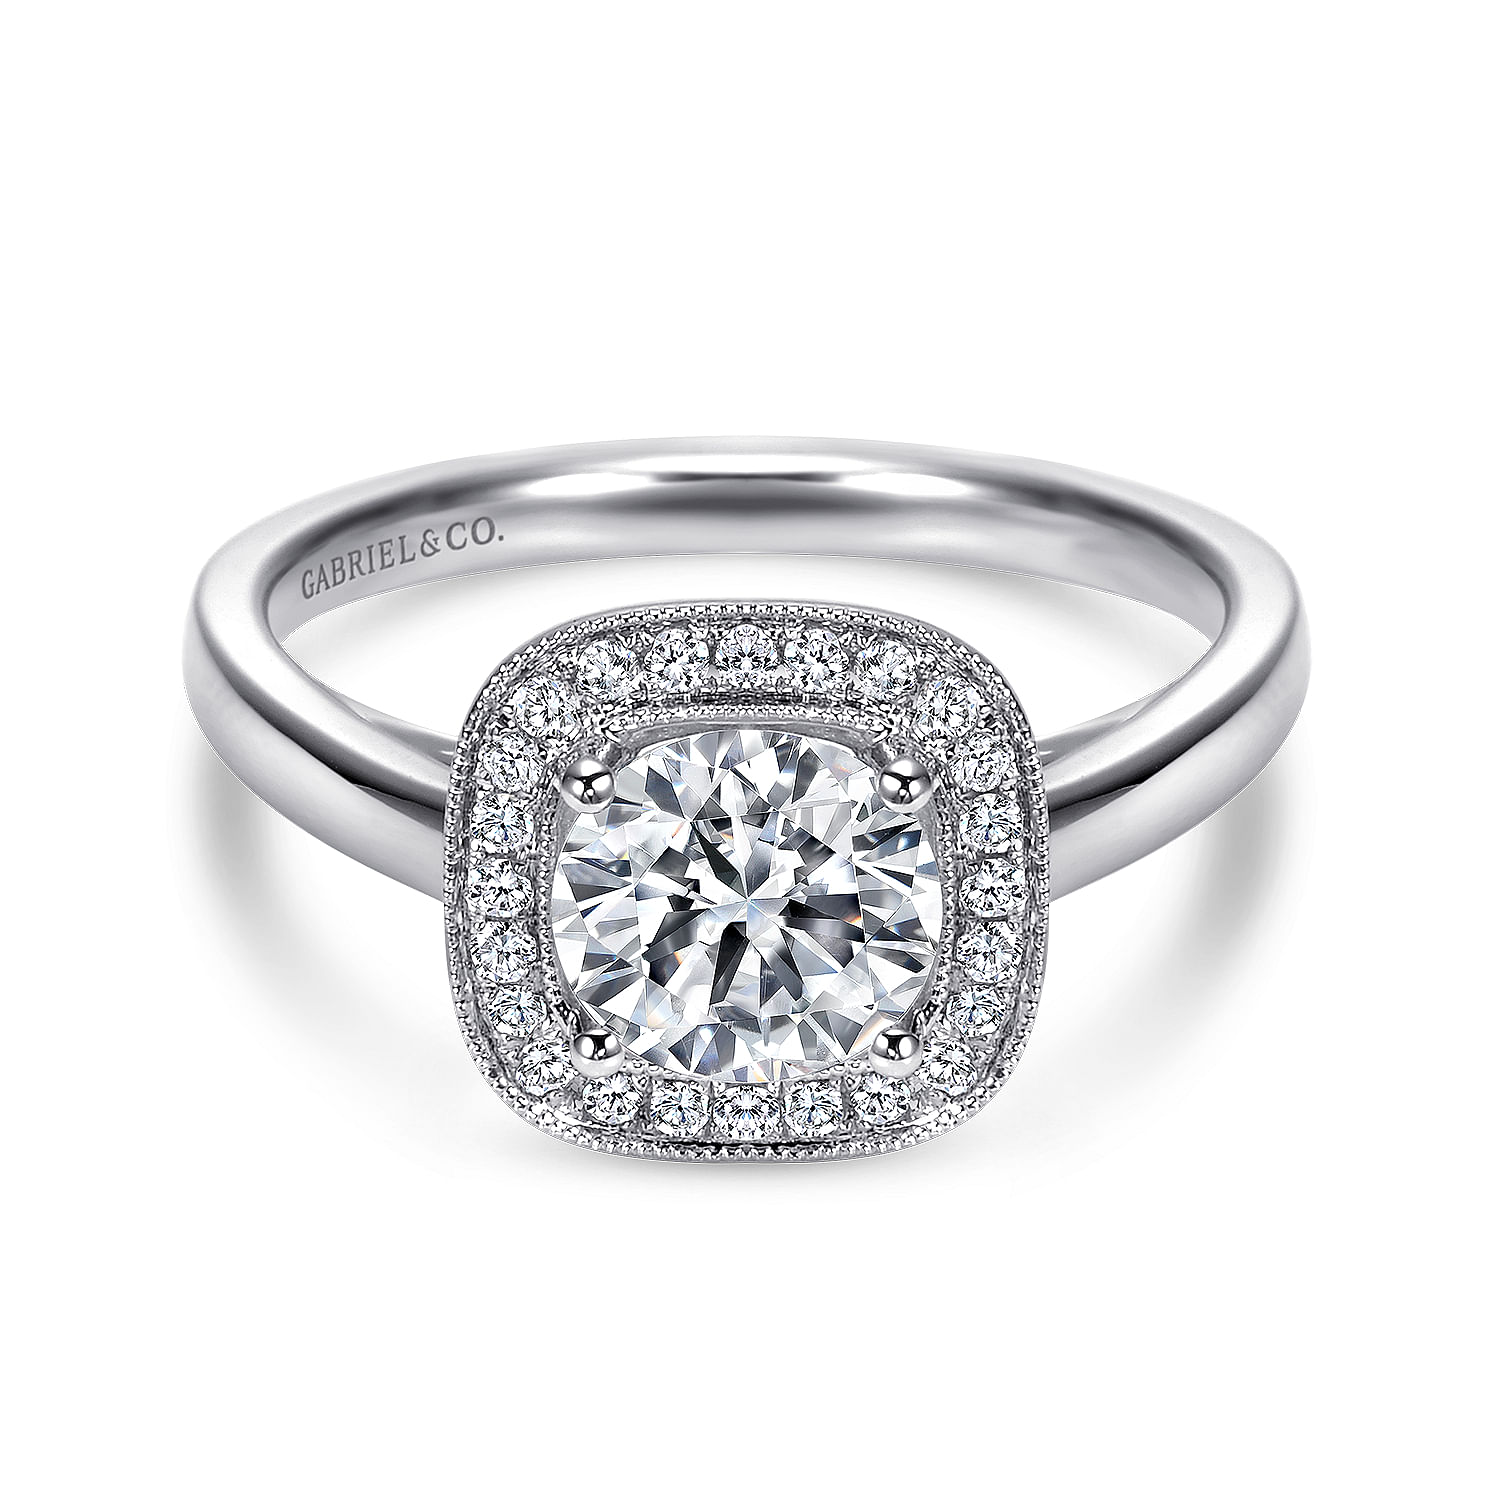 Marla - Vintage Inspired 14K White Gold Round Halo Diamond Engagement Ring